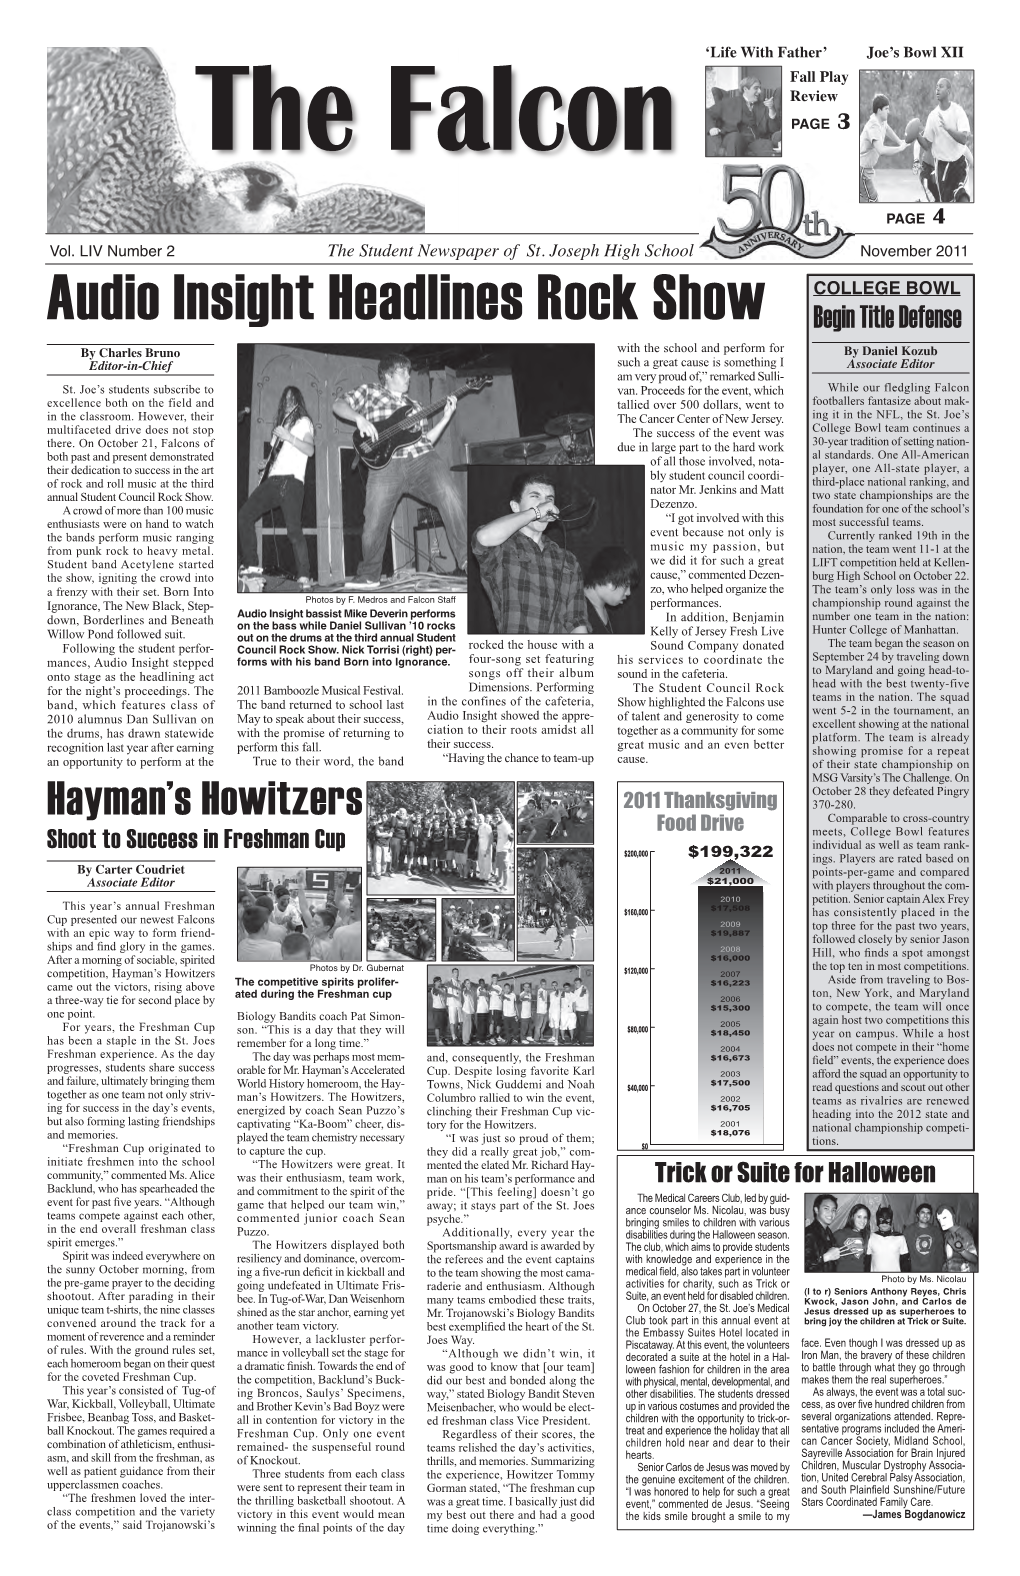 Audio Insight Headlines Rock Show Begin Title Defense